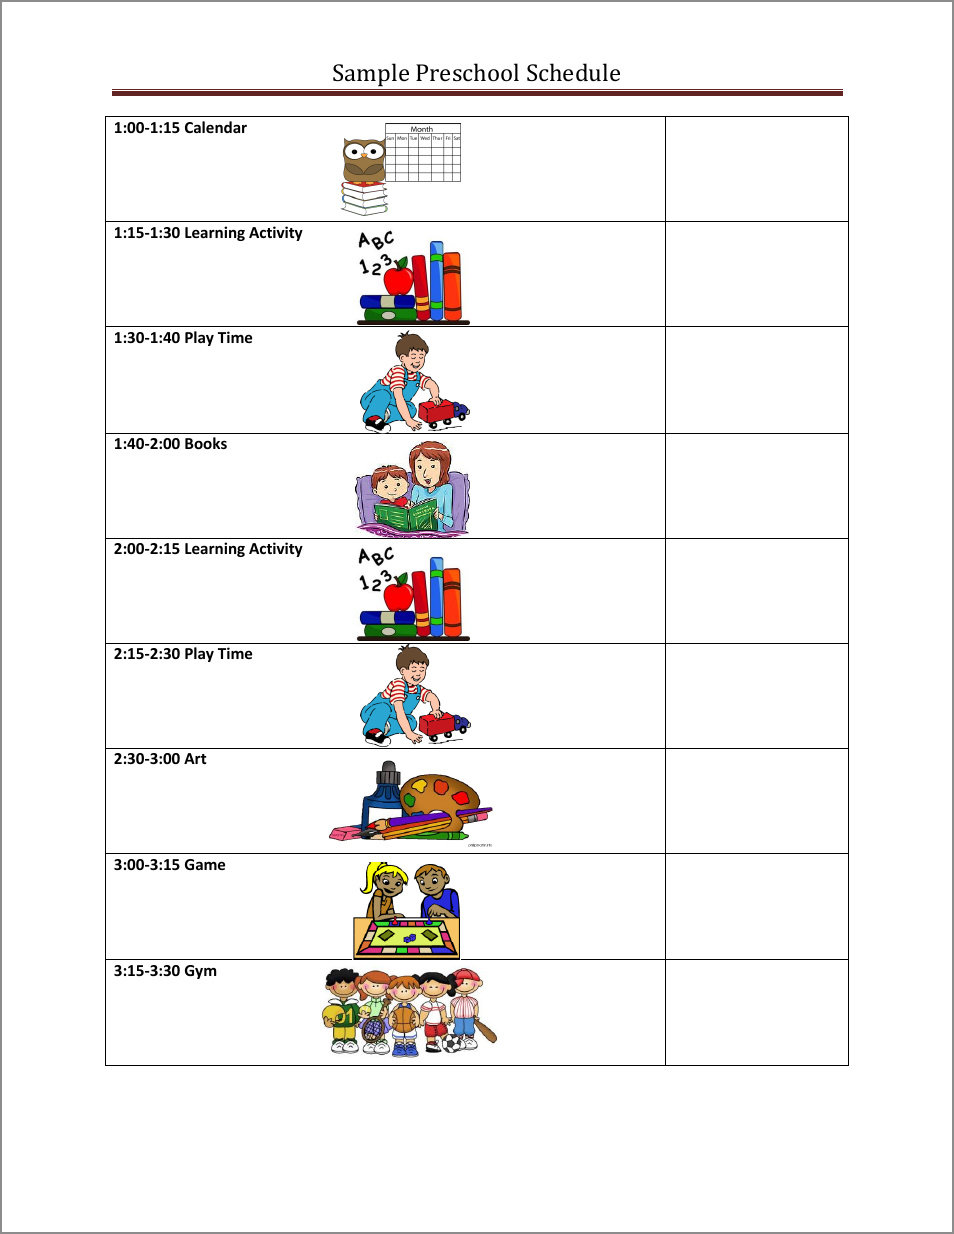 daily preschool schedule template